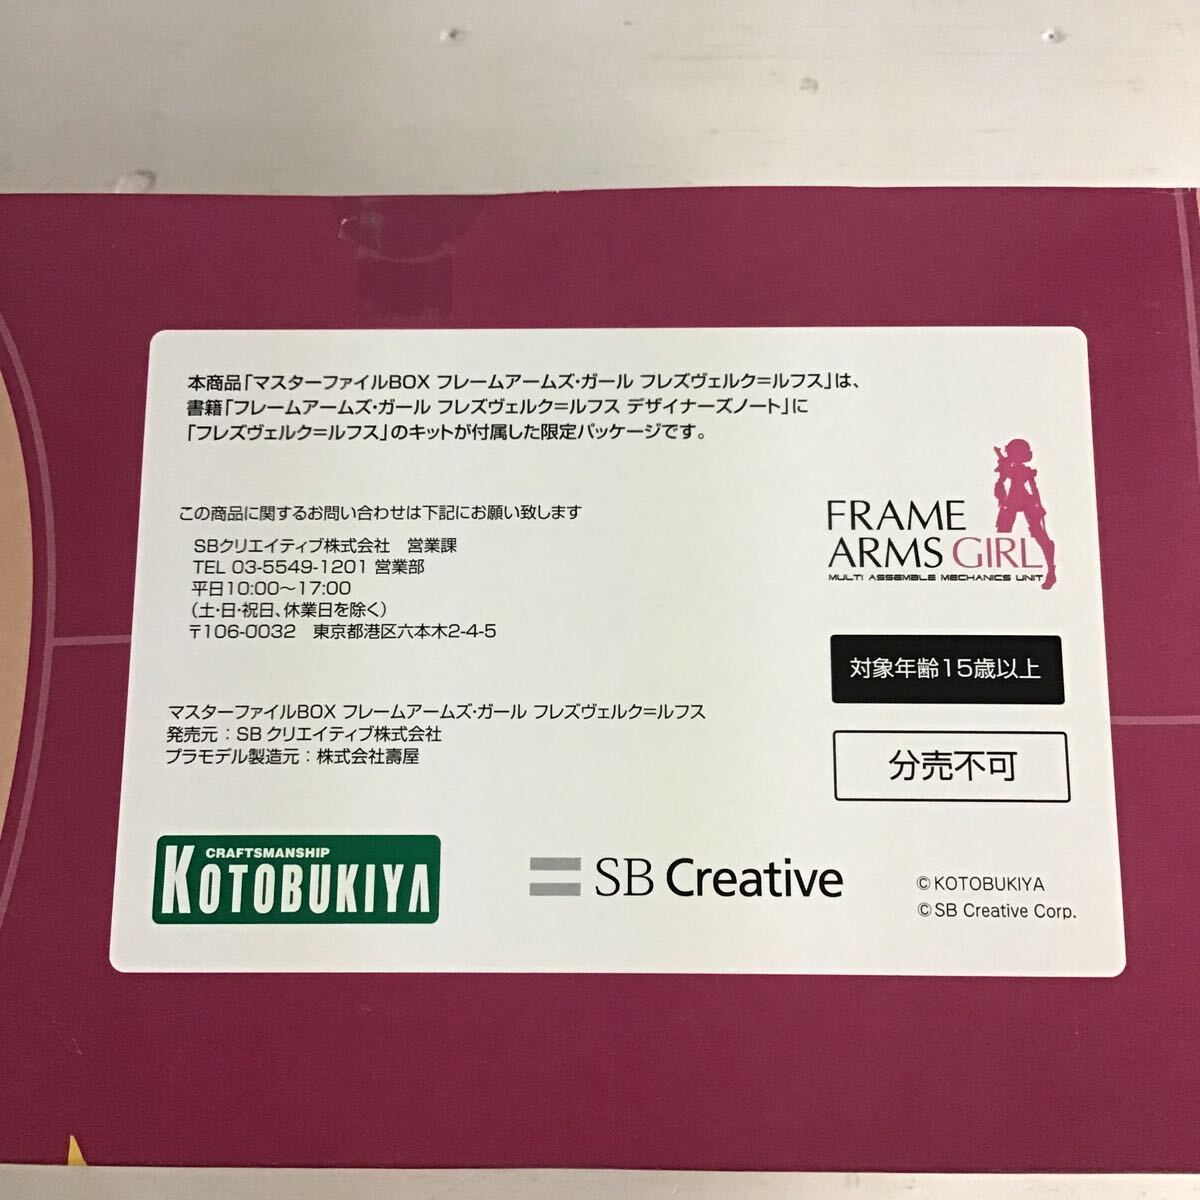 42[ not yet constructed ] Kotobukiya frame arm z* girl master file BOXfrezu.ruk=rufs(80)